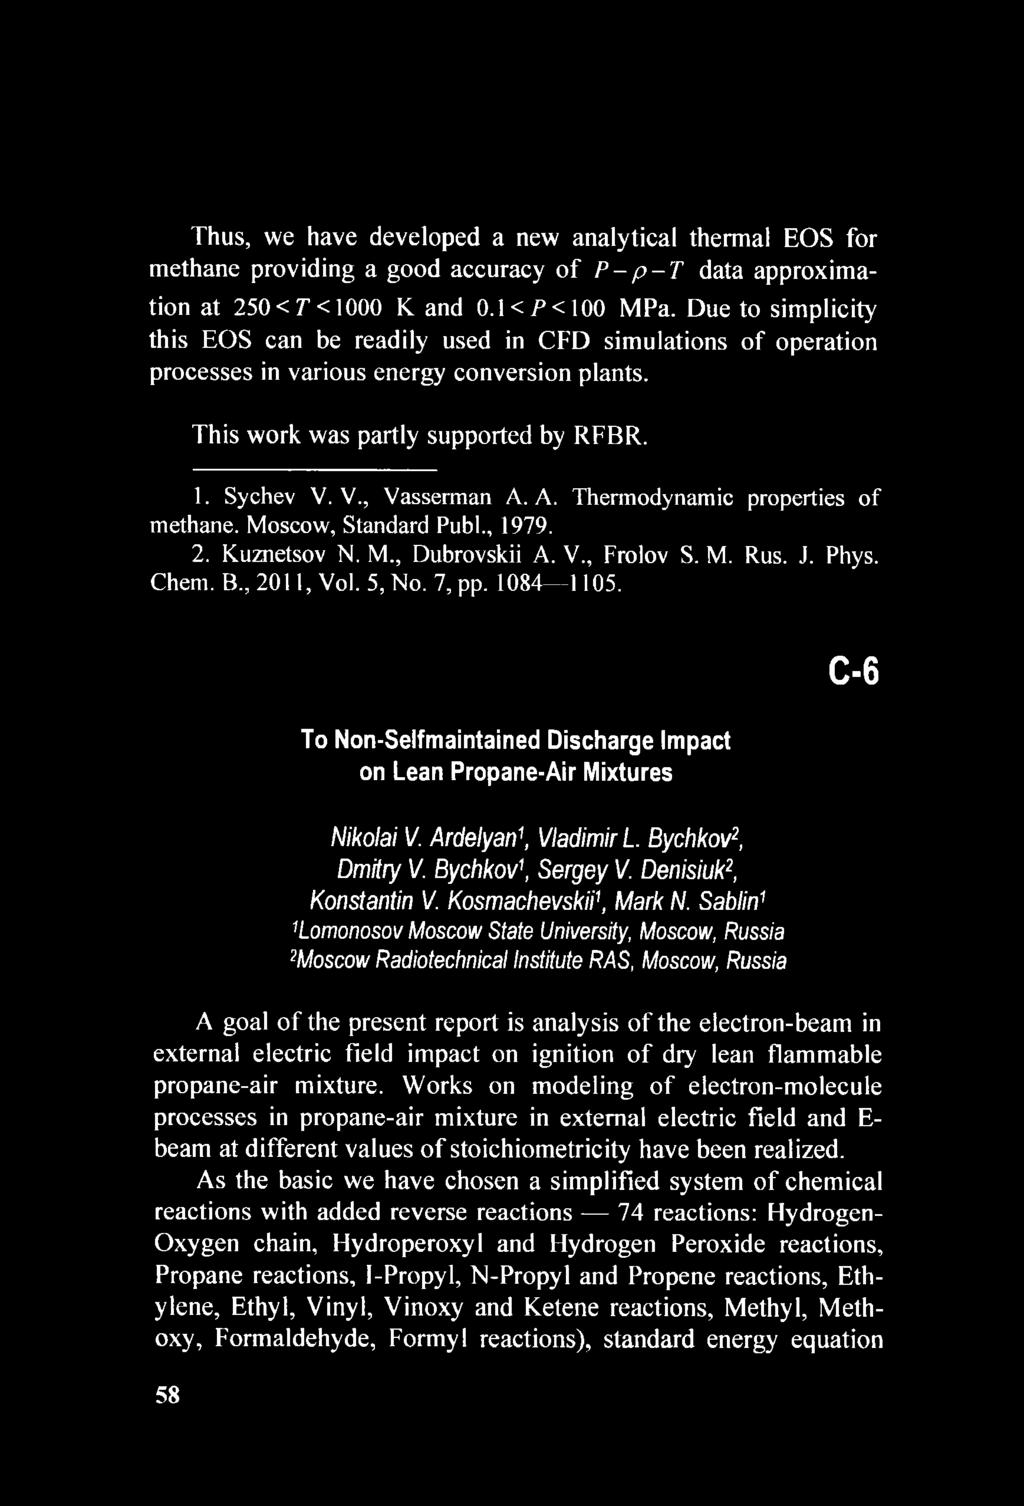 V., Vasserman A. A. Thermodynamic properties of methane. Moscow, Standard Publ., 1979. 2. Kuznetsov N. М., Dubrovskii A. V., Frolov S. M. Rus. J. Phys. Chem. B., 2011, Vol. 5, No. 7, pp. 1084 1105.